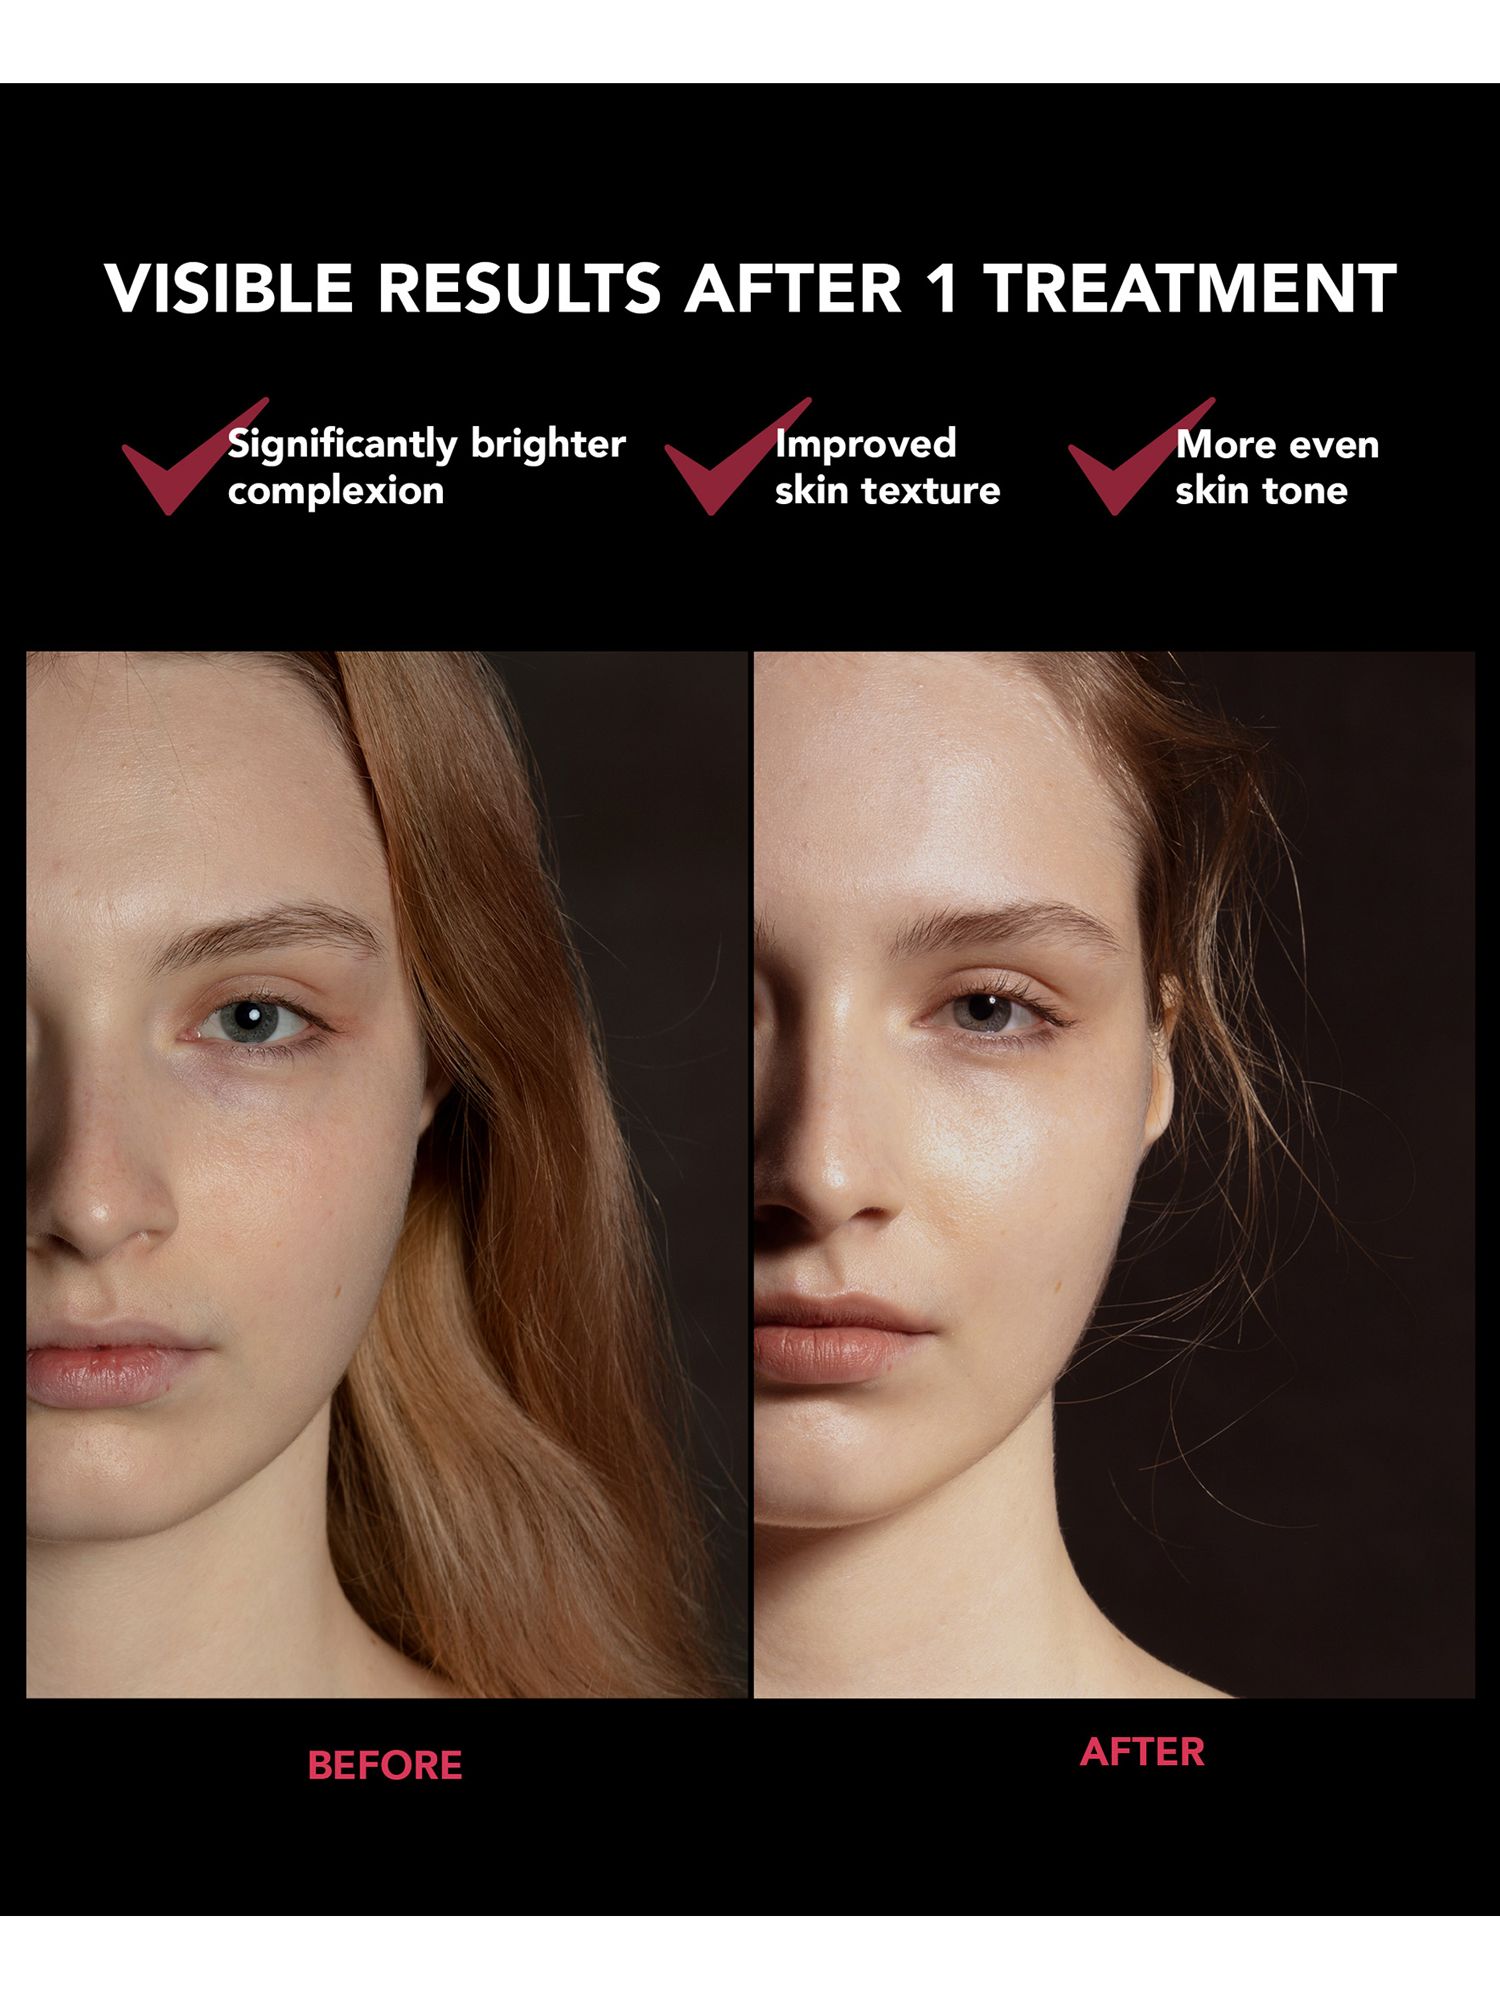 FOREO FAQ™ 201 LED Anti-Ageing Face Mask Treatment